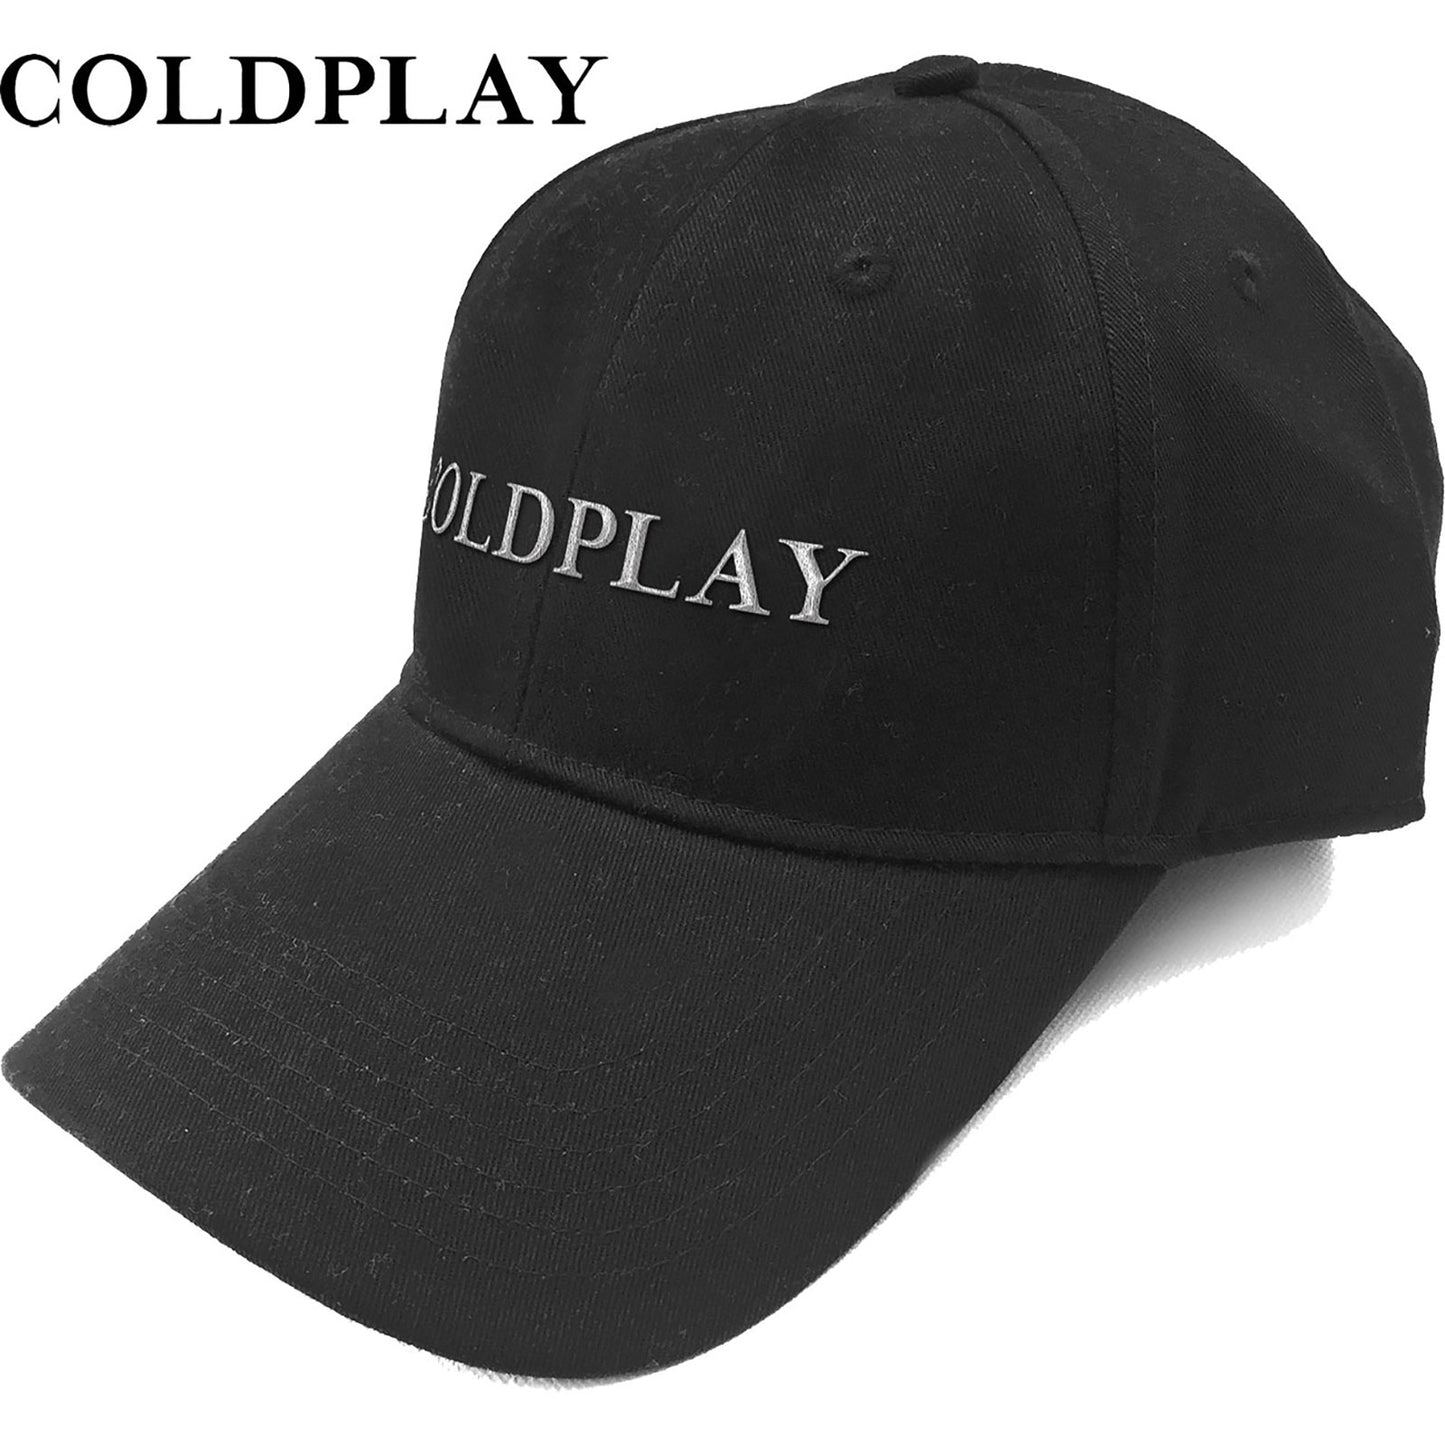 Coldplay Baseball Cap: White Logo